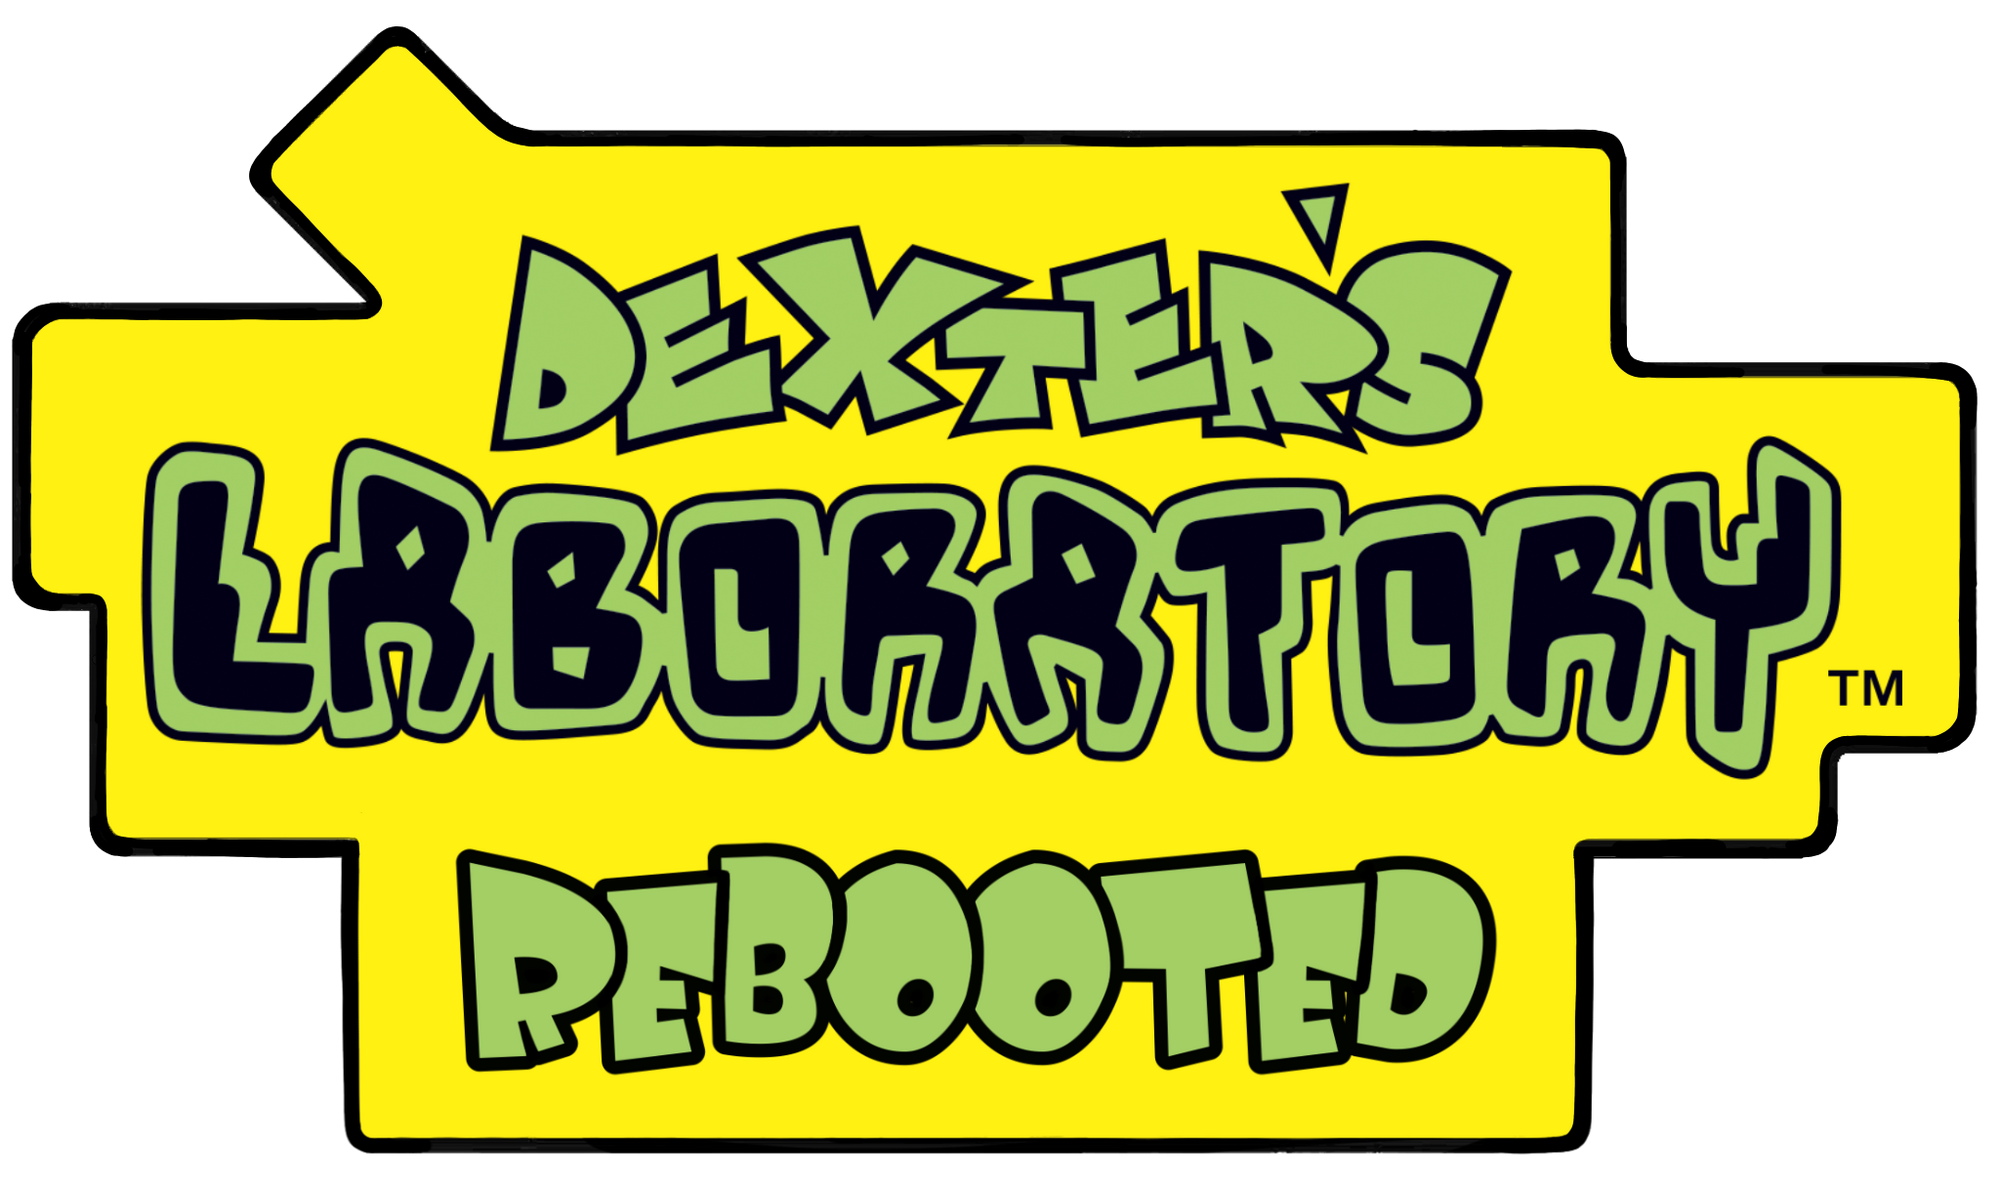 Dexter’s Laboratory Rebooted Seasons 5 6 Dexter S Laboratory Fanon